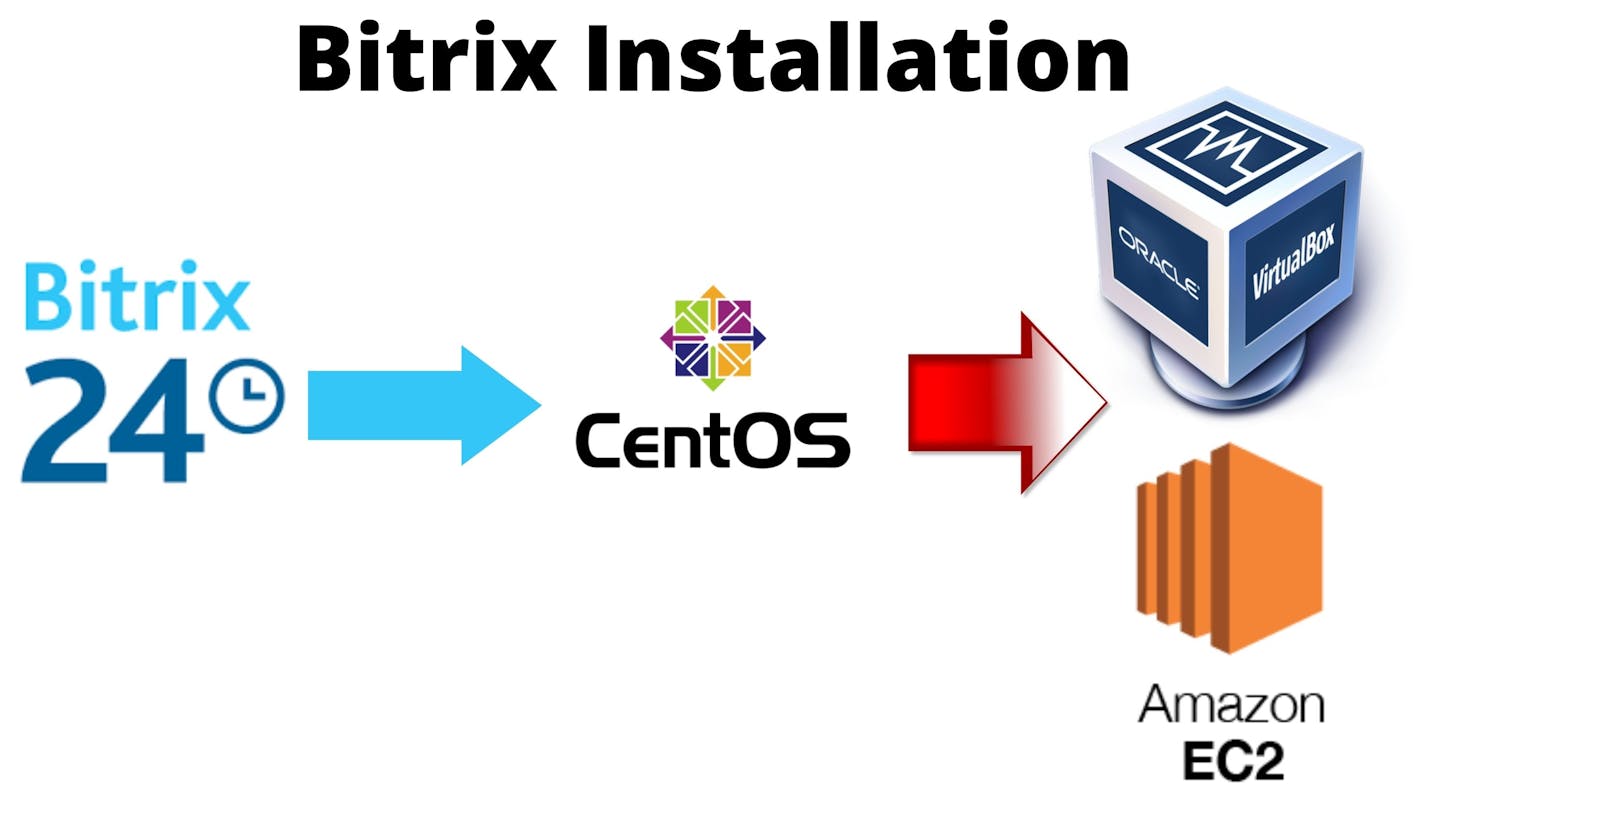 Bitrix Installation on Centos (Virtualbox & EC2)